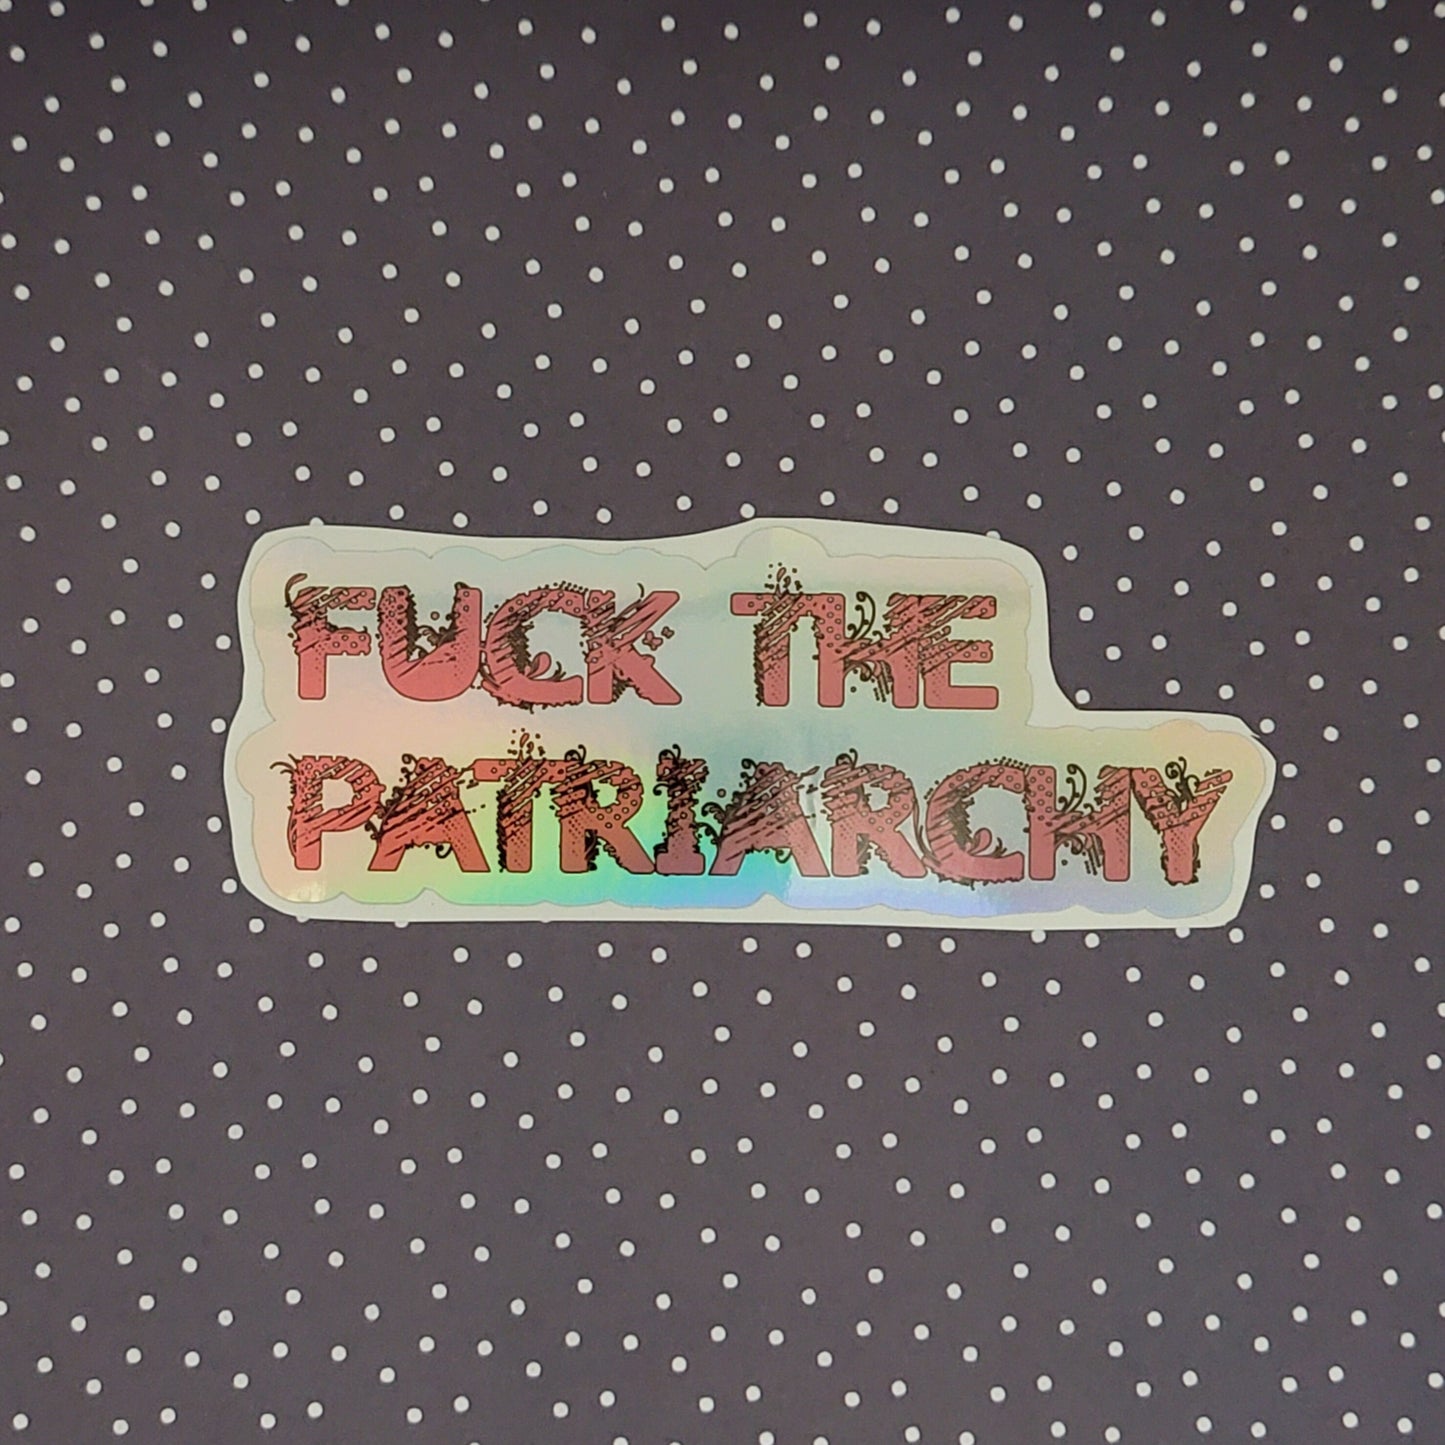 F*** the patriarchy sticker